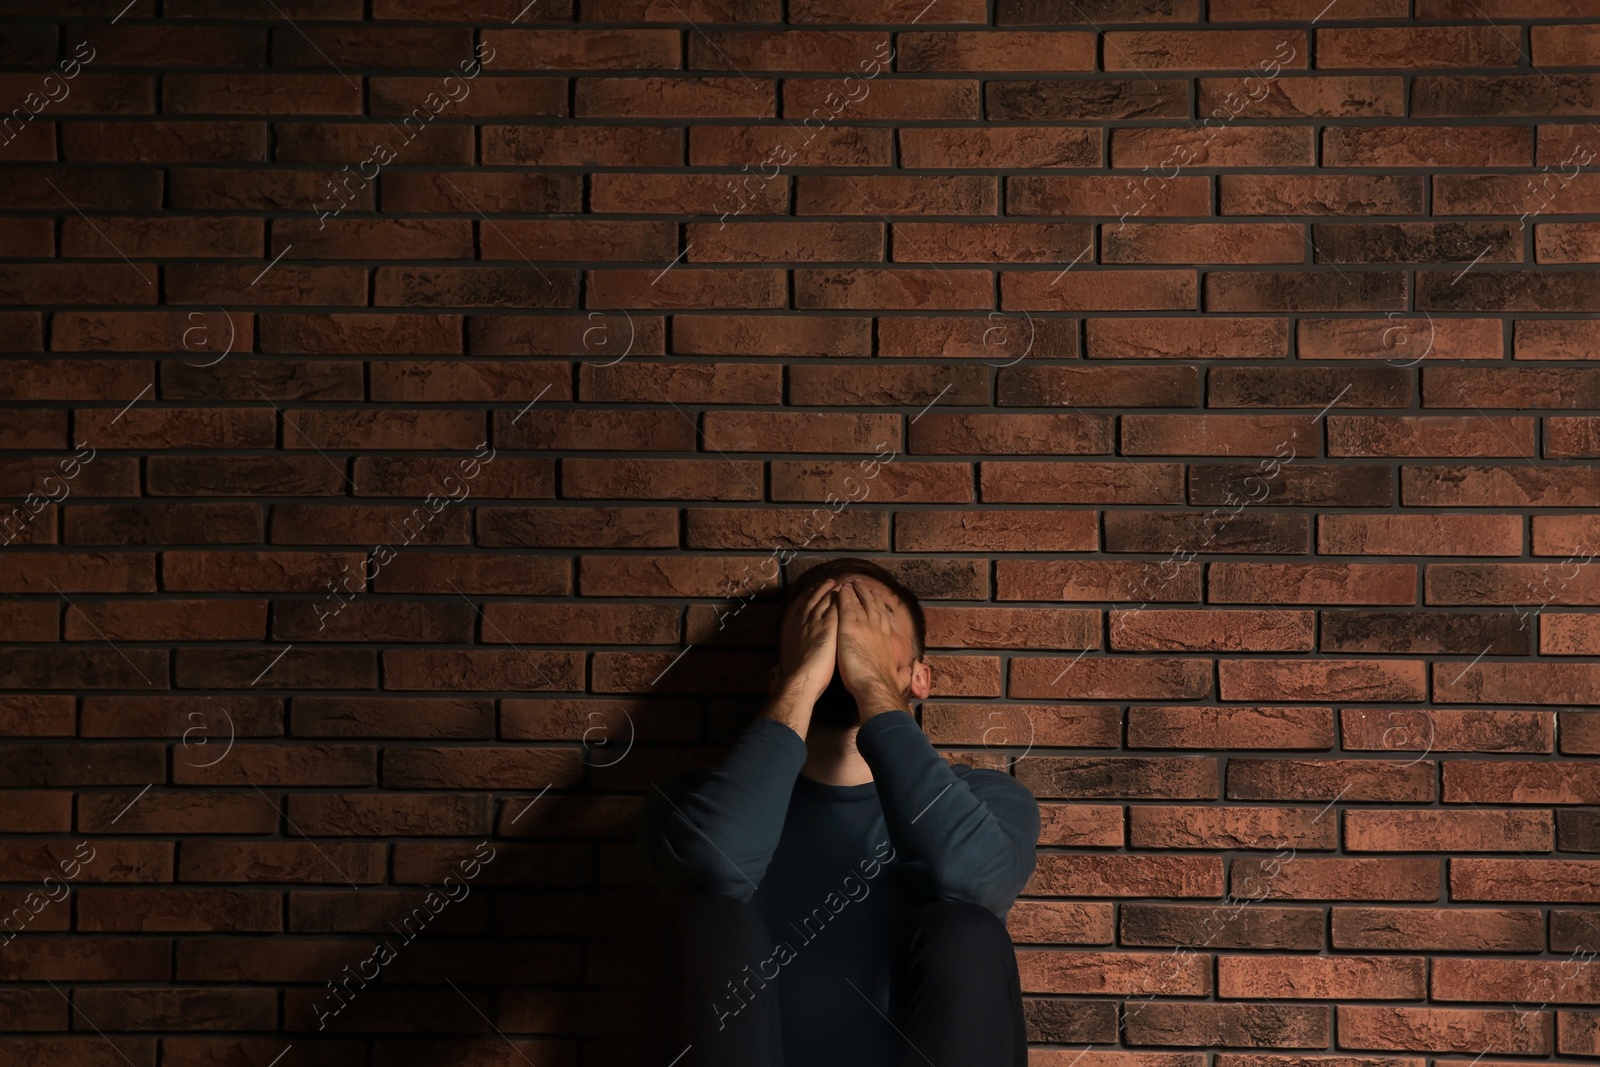 Photo of Depressed young man sitting near brick wall